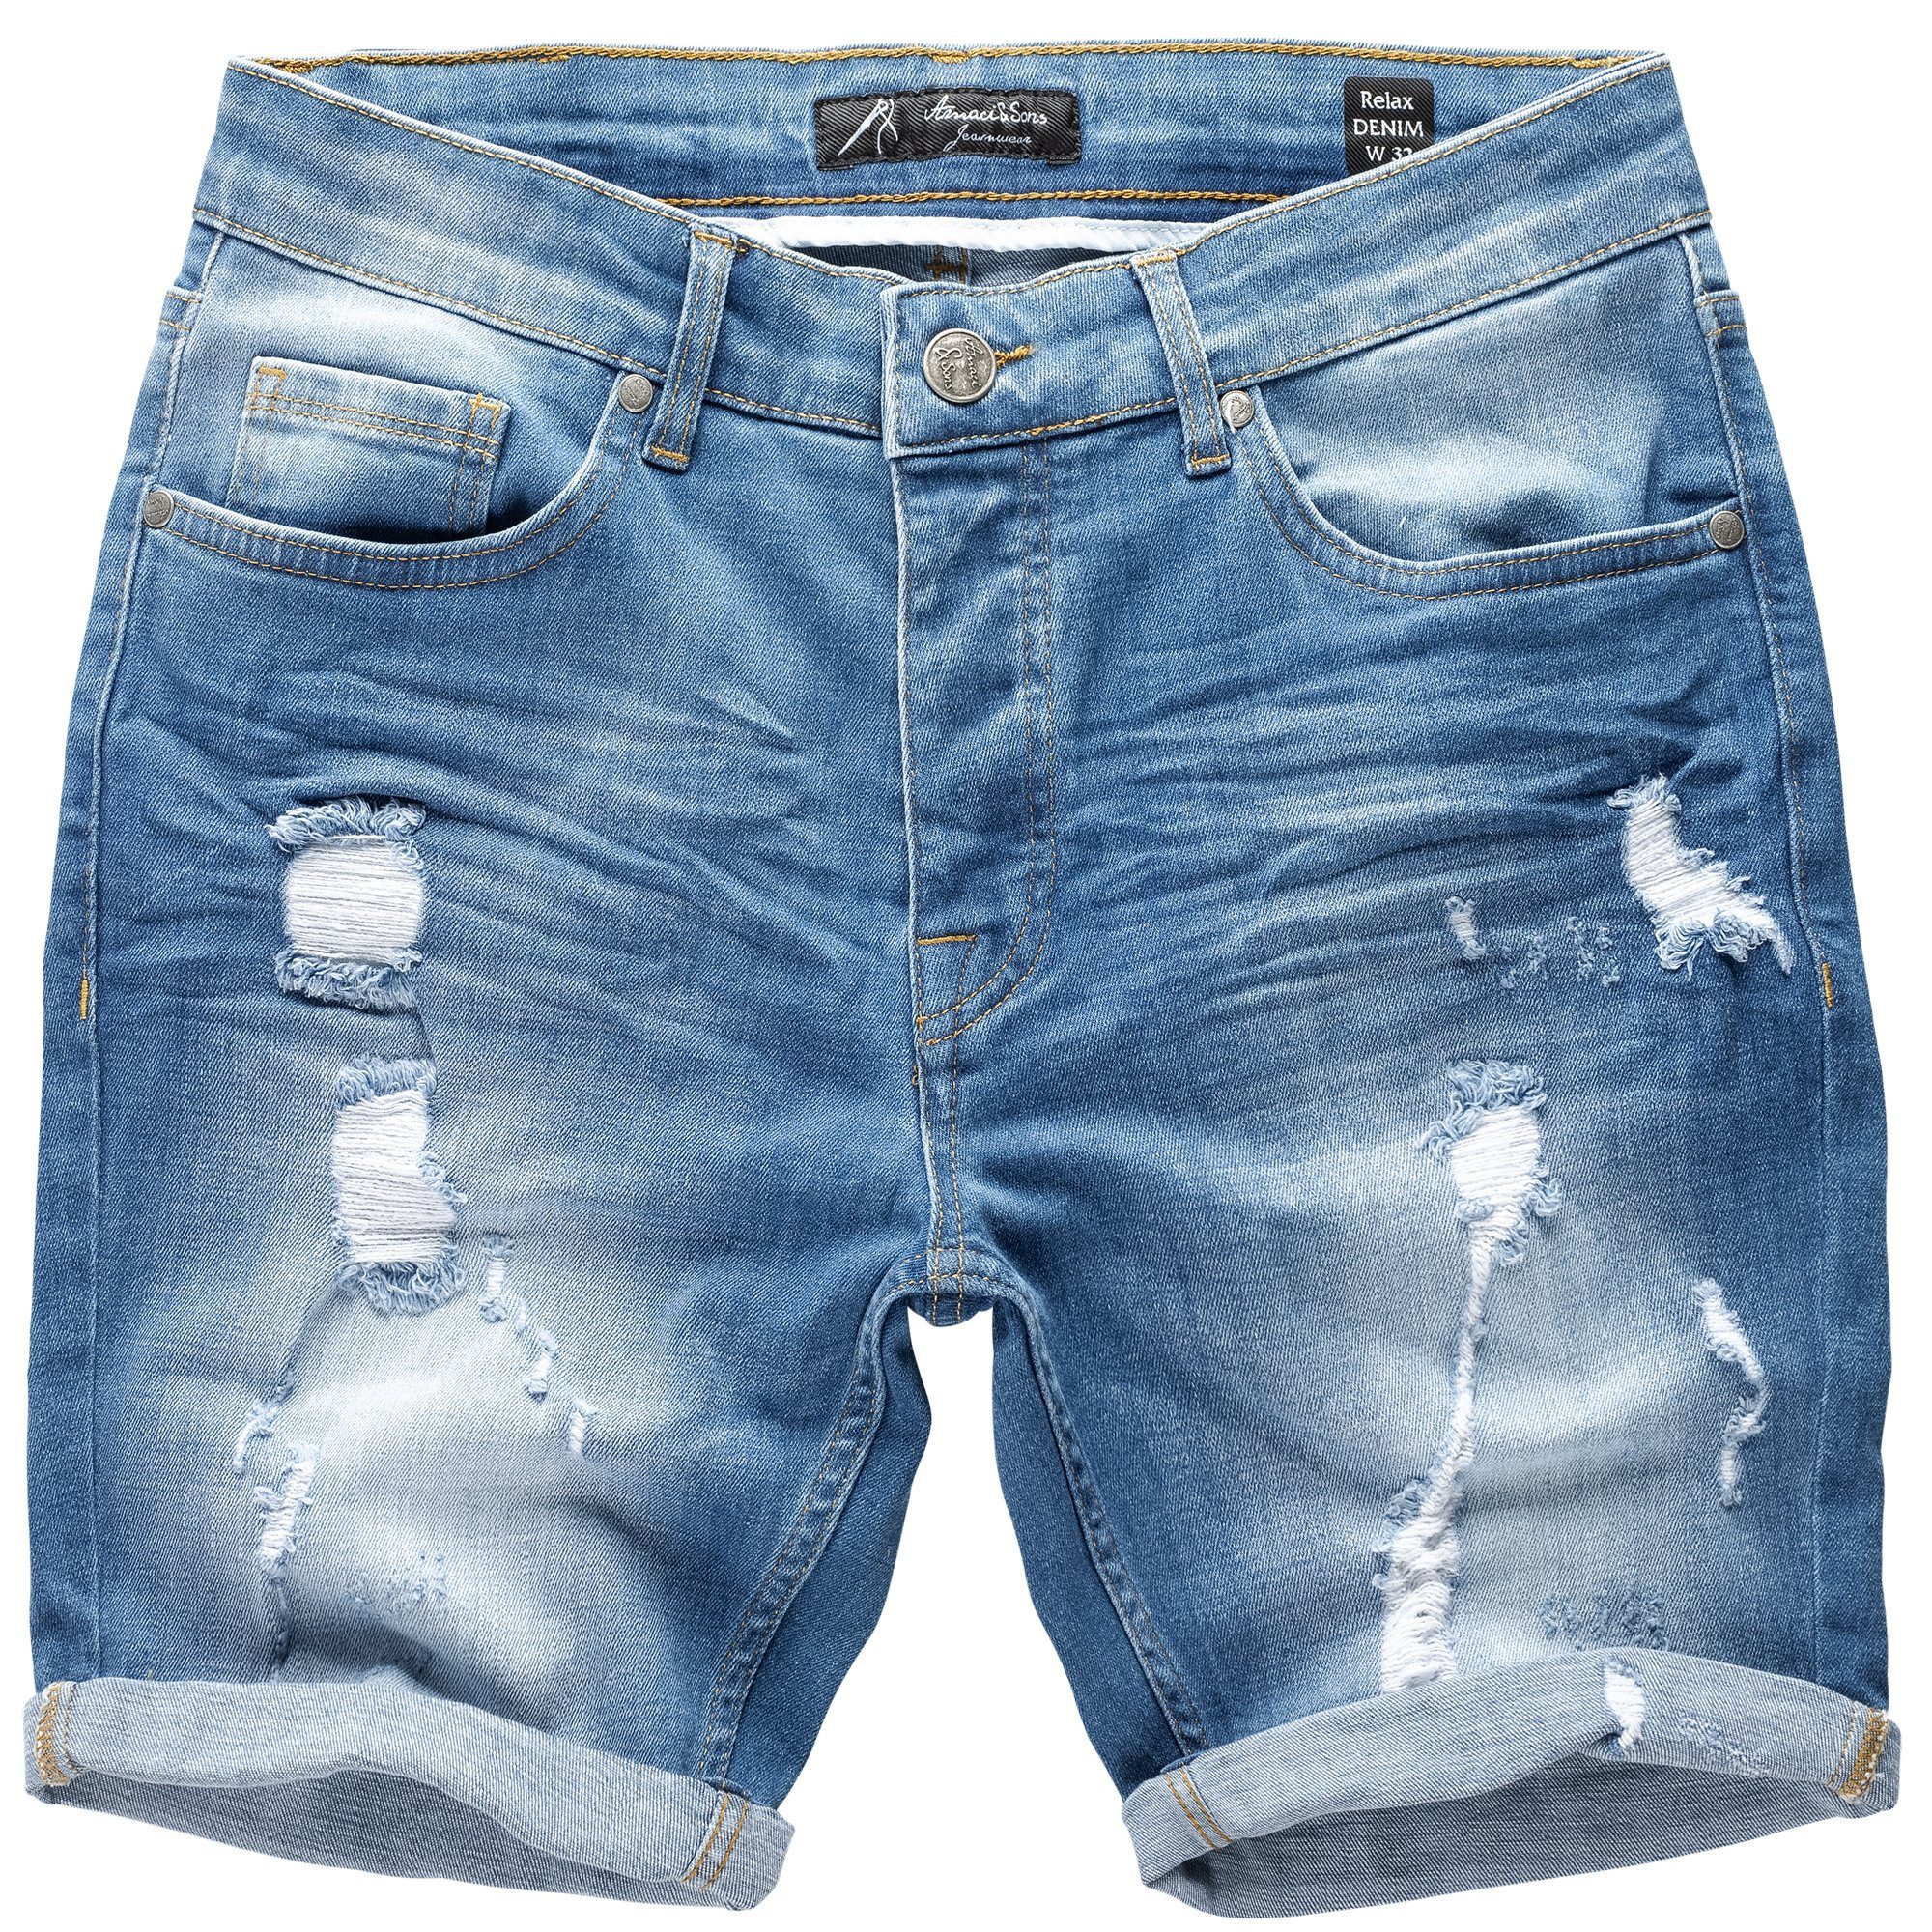 Hellblau SAN DIEGO Amaci&Sons Destroyed Shorts Jeans Jeansshorts